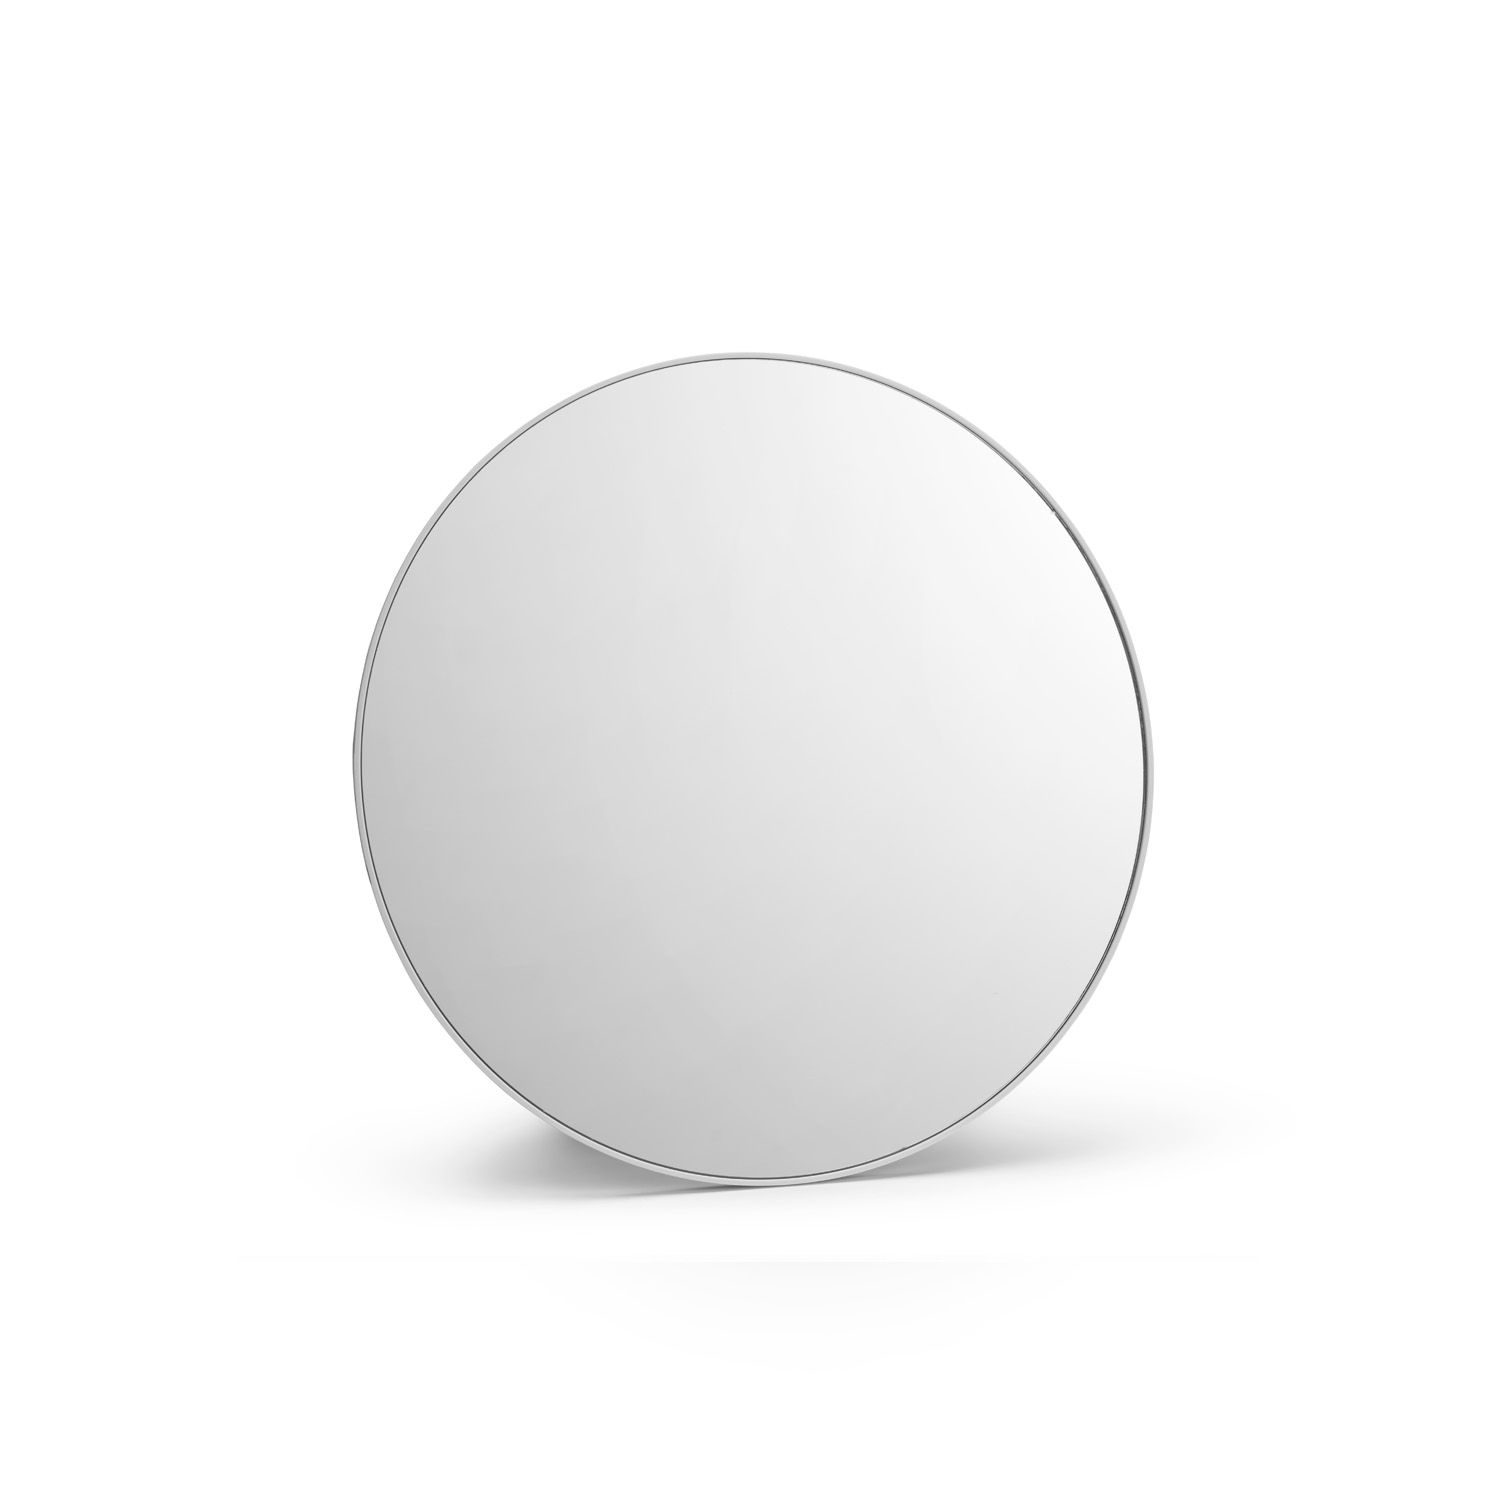 Control mirror - stylingové zrcadlo, průměr 29 cm